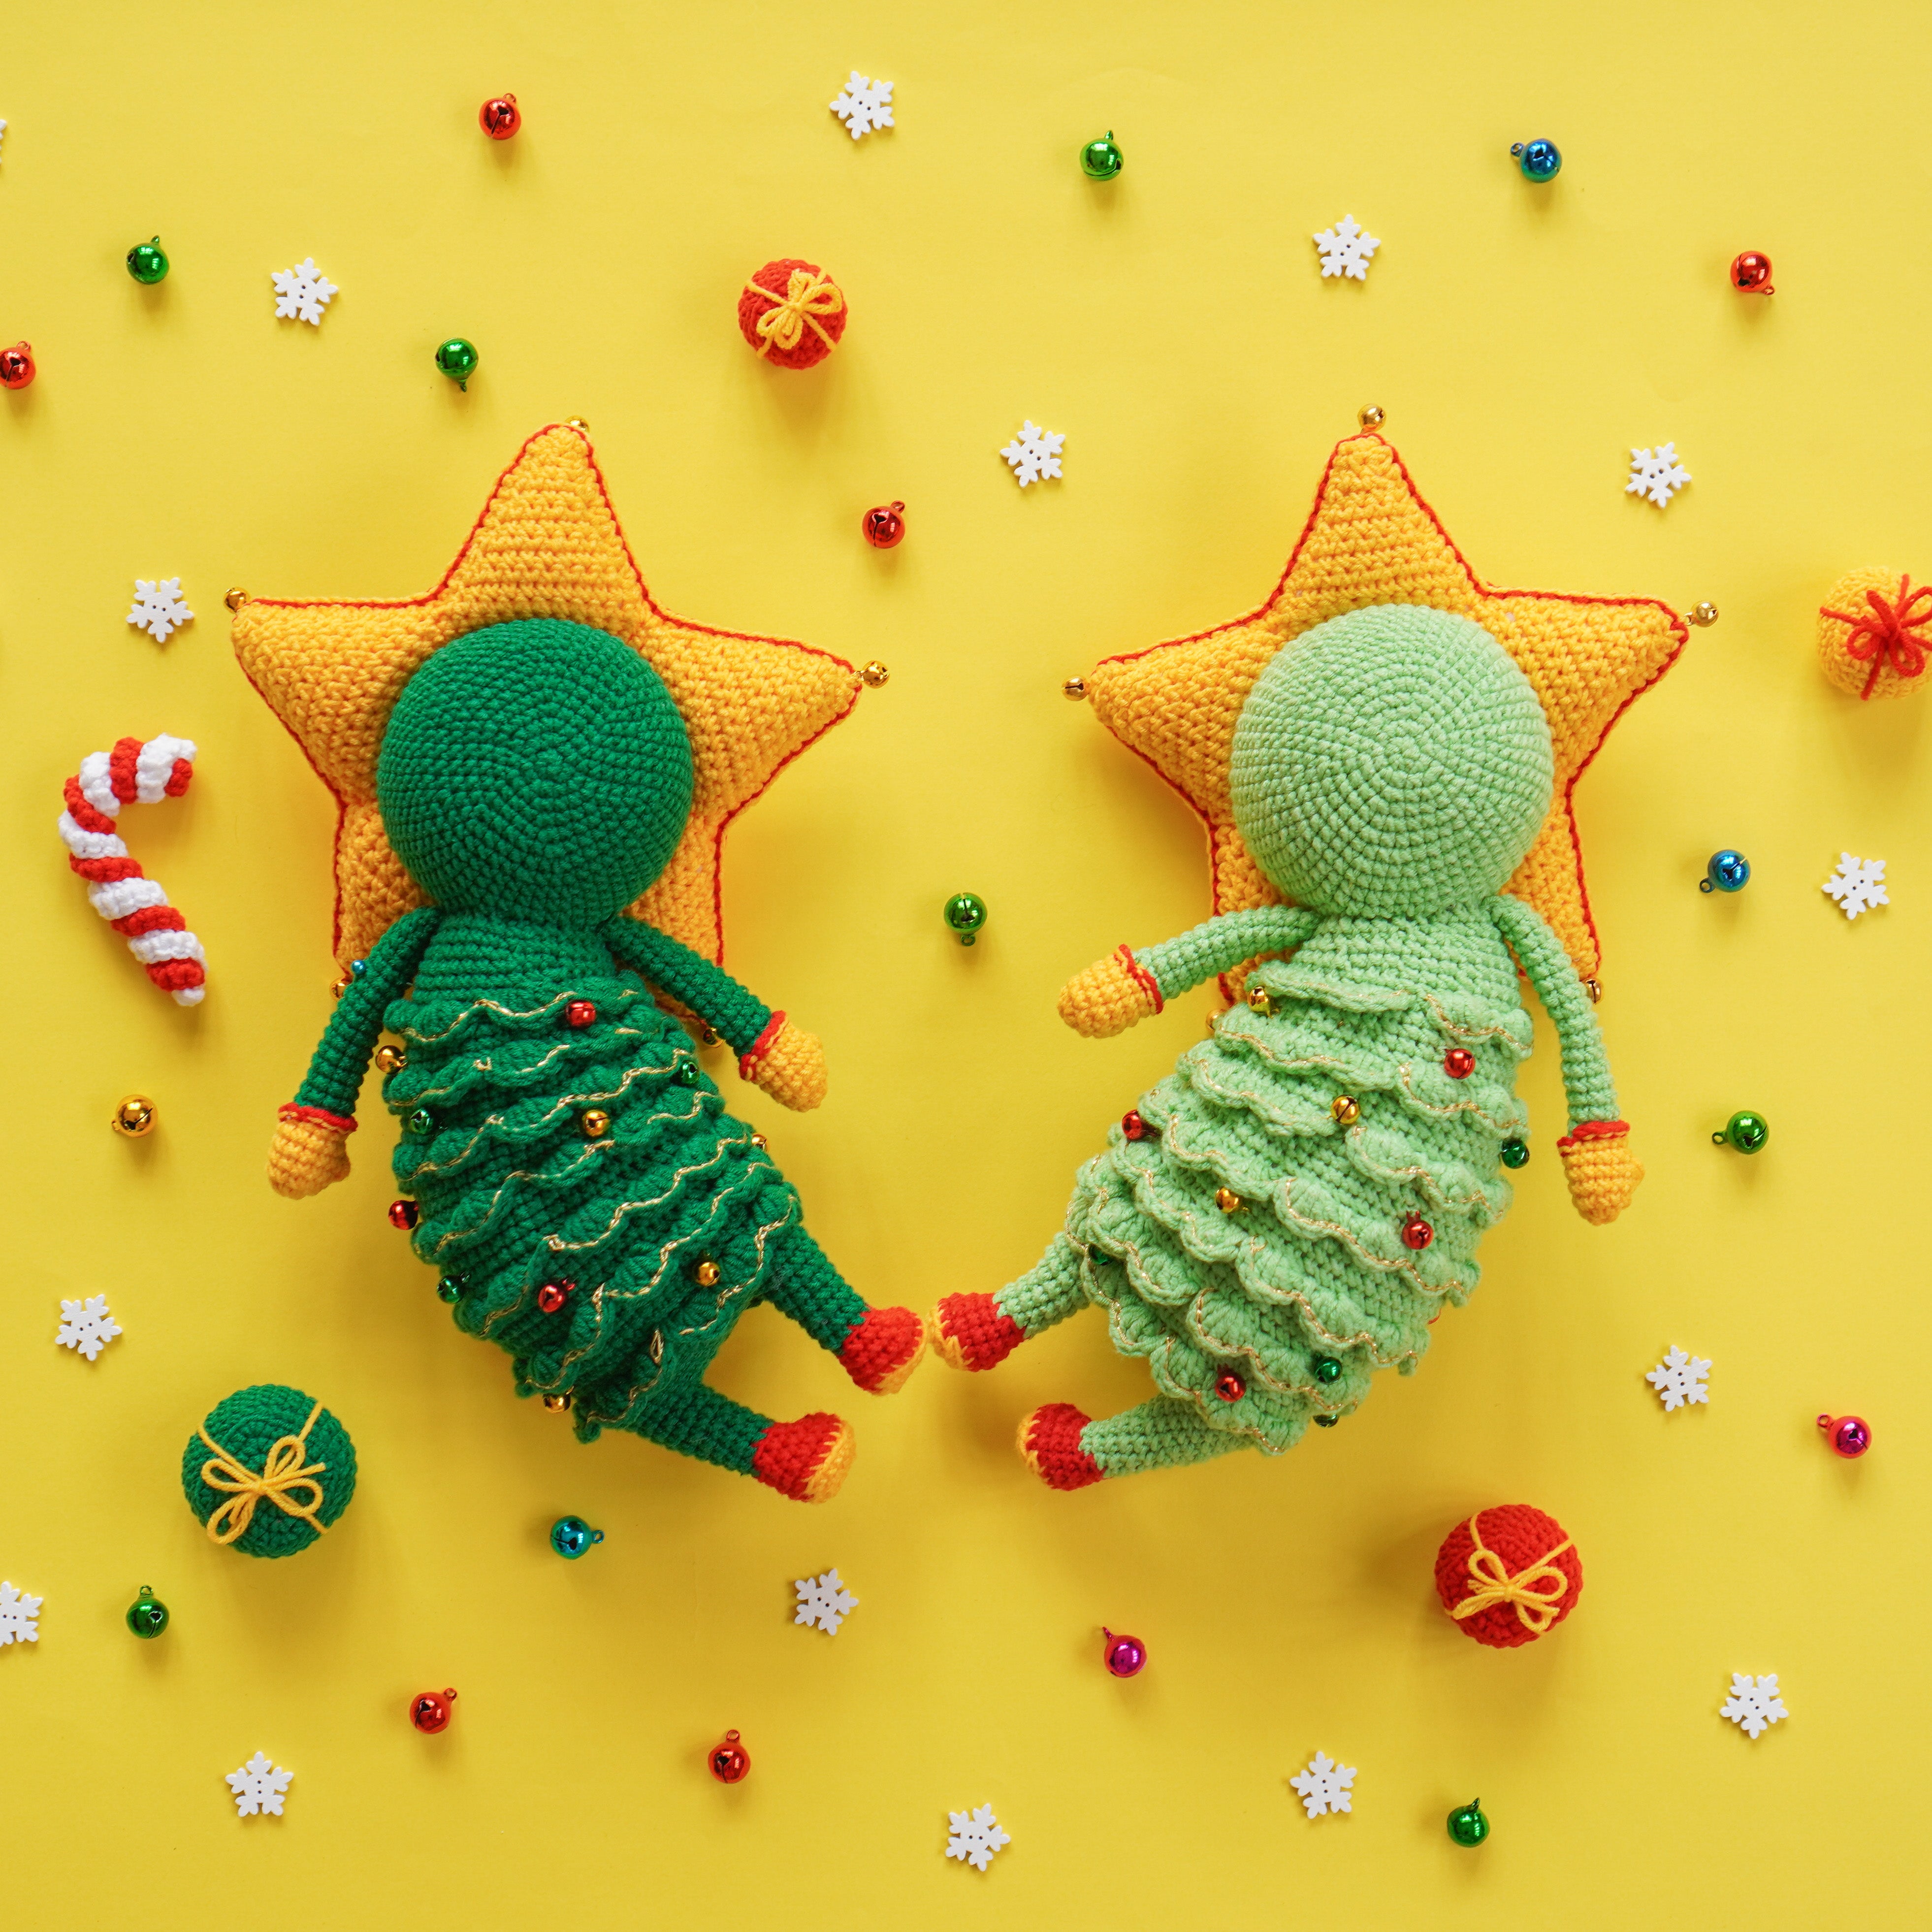 The Christmas Tree Crochet Pattern by Aquariwool (Crochet Doll Pattern/Amigurumi Pattern for Baby gift)